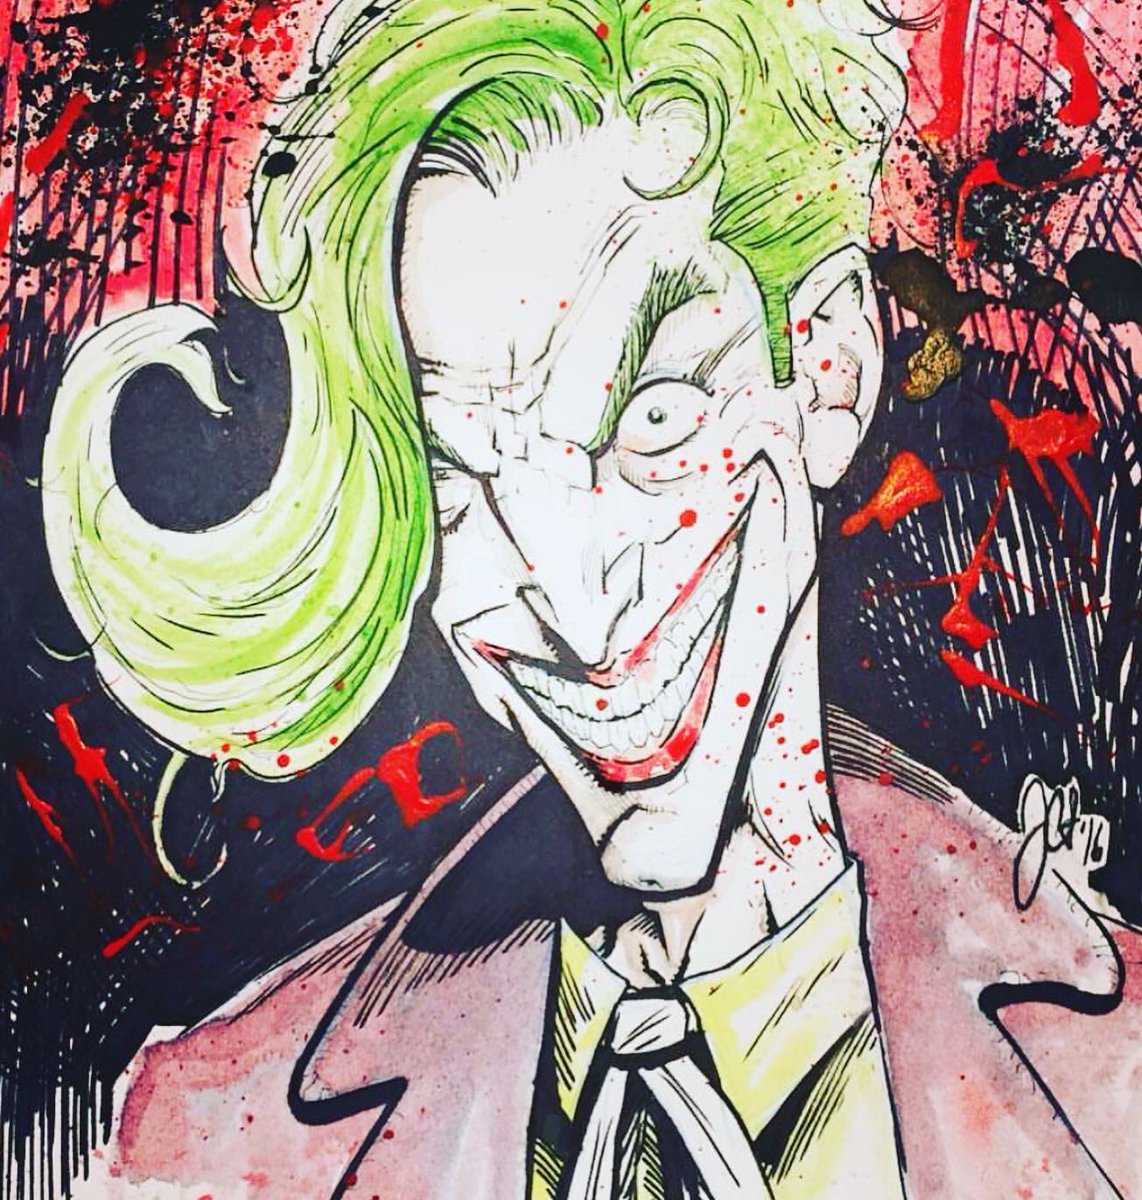 Throwback post #4! Posted in 2016! Joker and Batman! #joker #batman @dcofficial #art #traditionalart #myart #drawing #illustration #digitalart #comics #comicartist #illustrator #jchristopherschmidt #throwback #oldposts